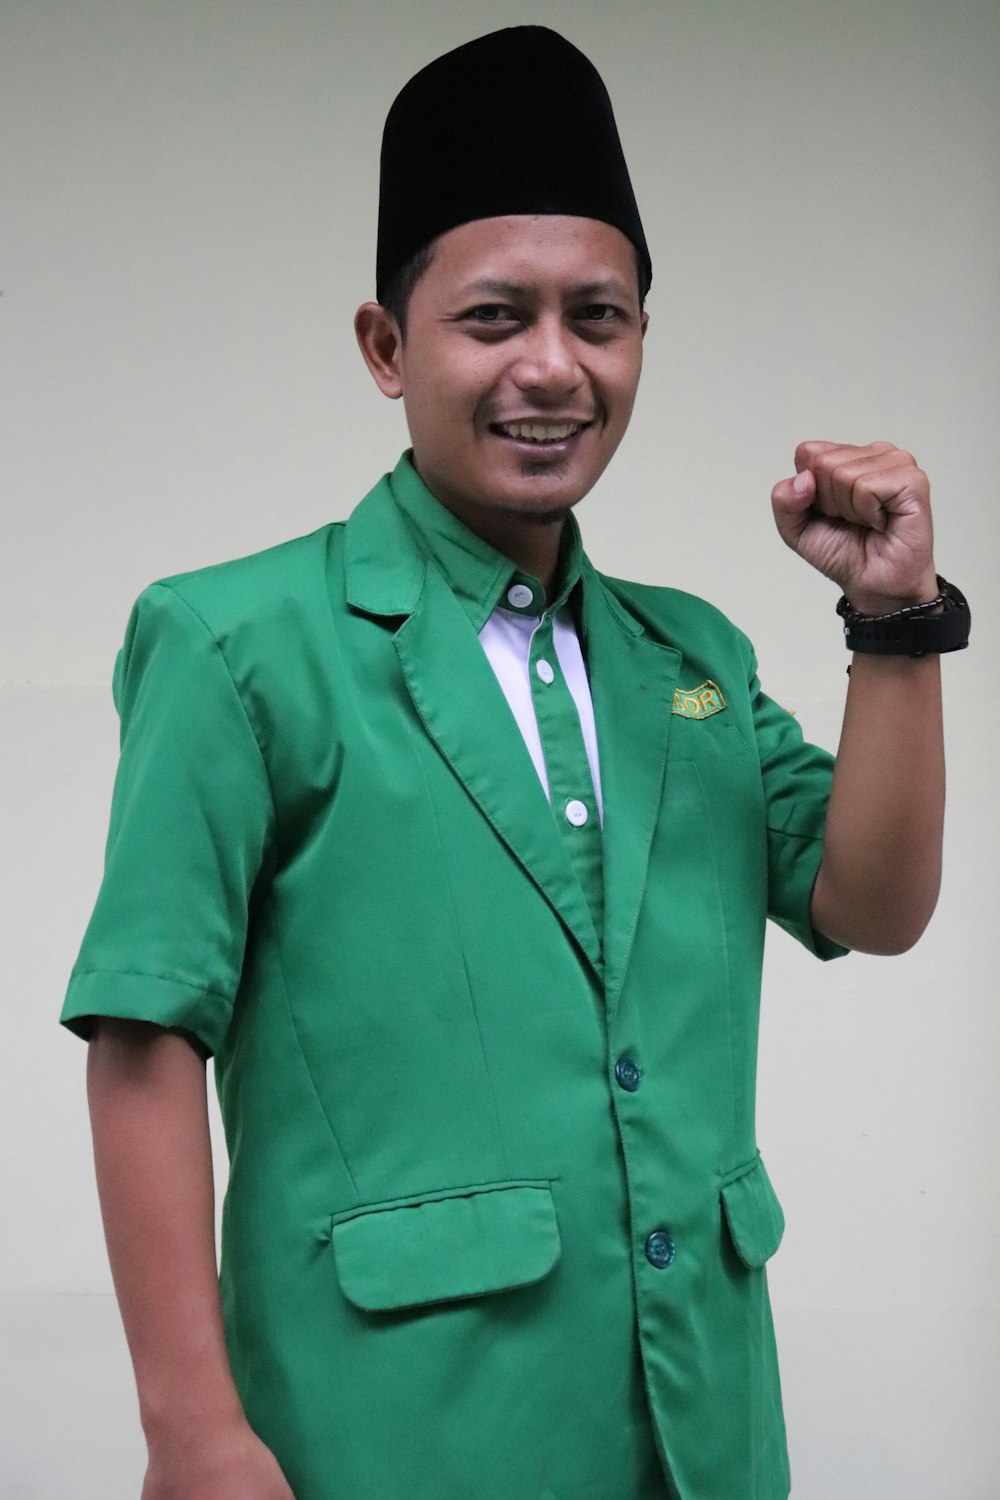 man in green button up shirt